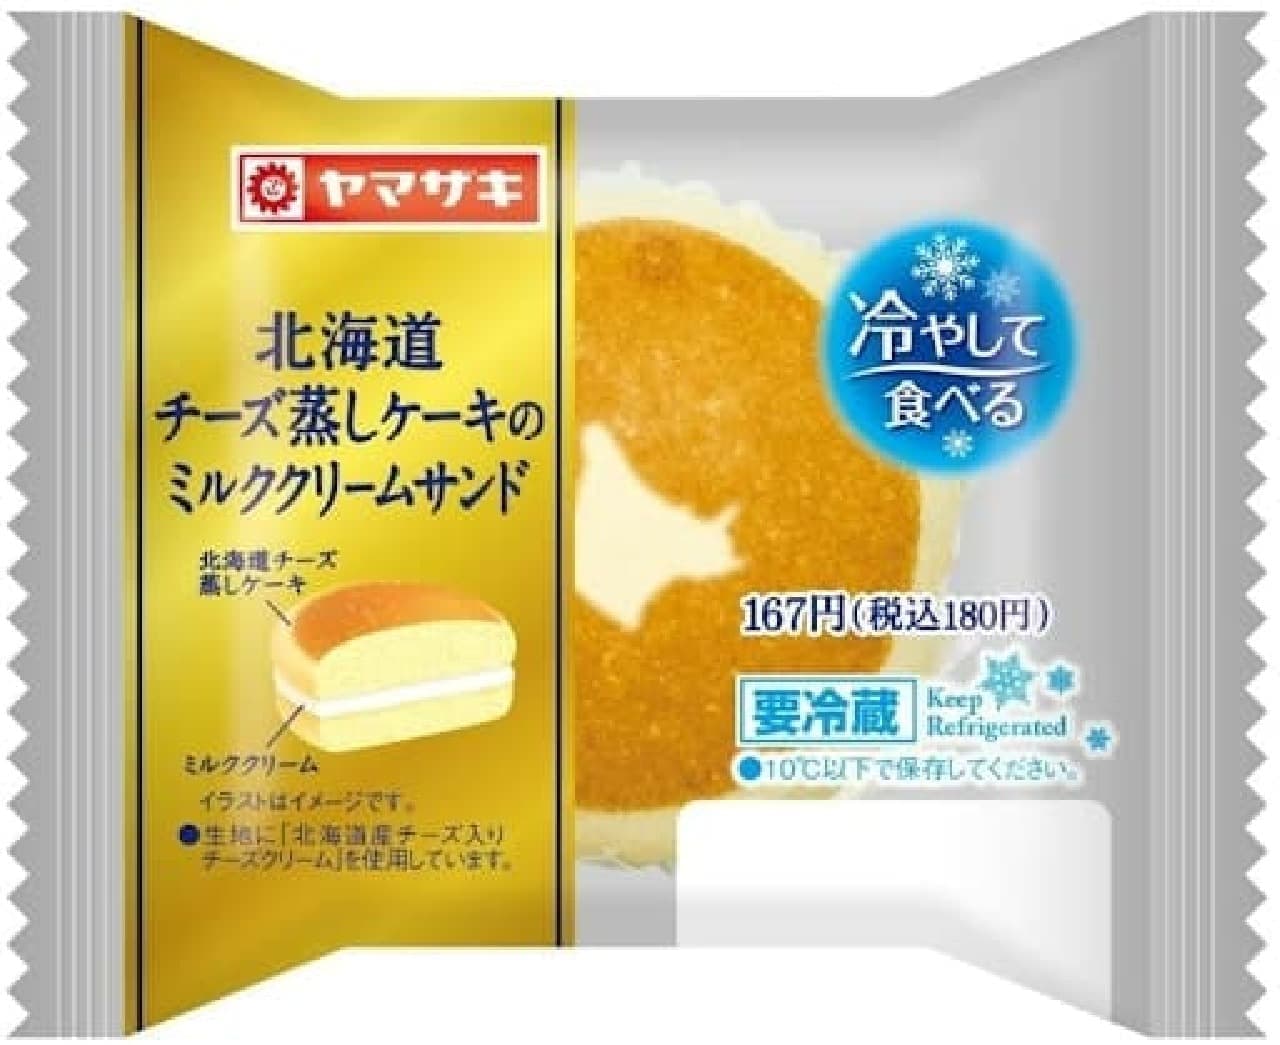 FamilyMart "Milk Cream Sandwich with Hokkaido Cheese Steamed Cake